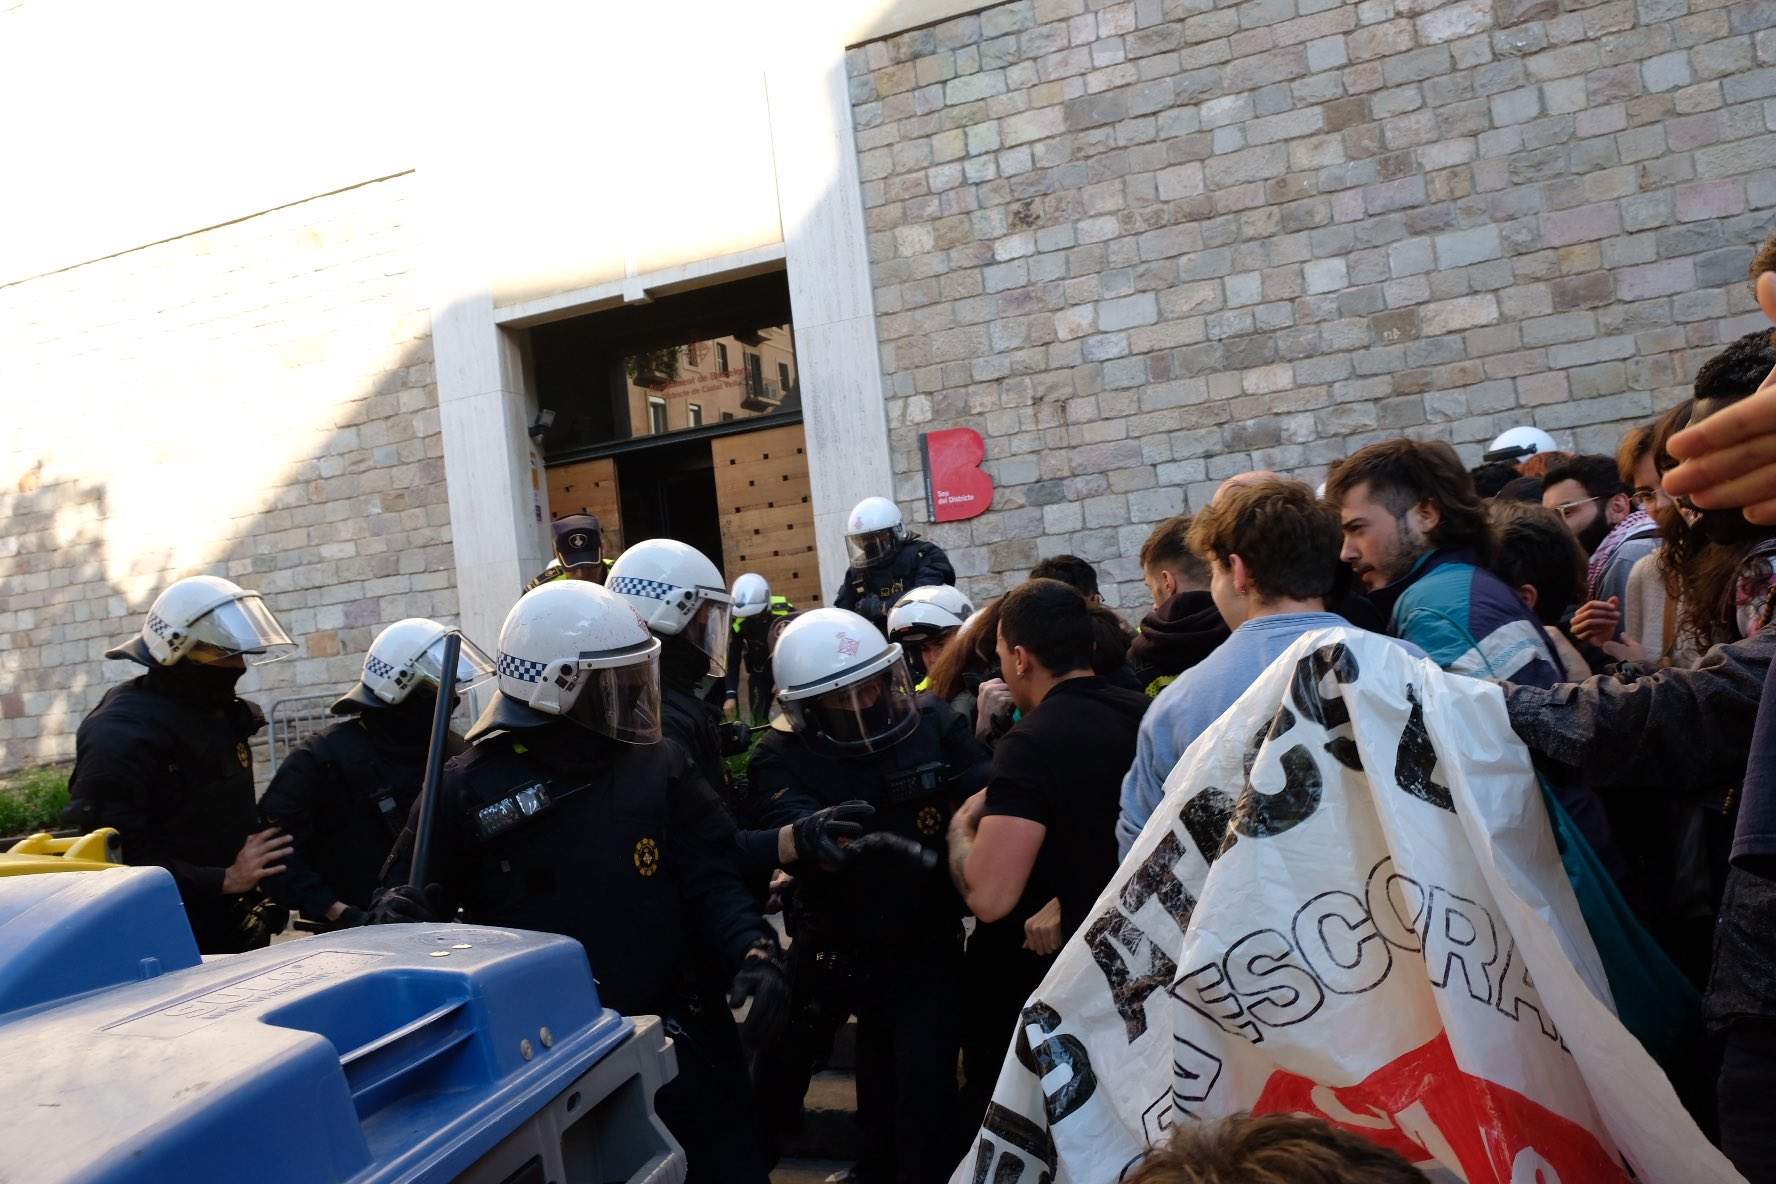 Concentracio antiga escola massana la tancada mossos